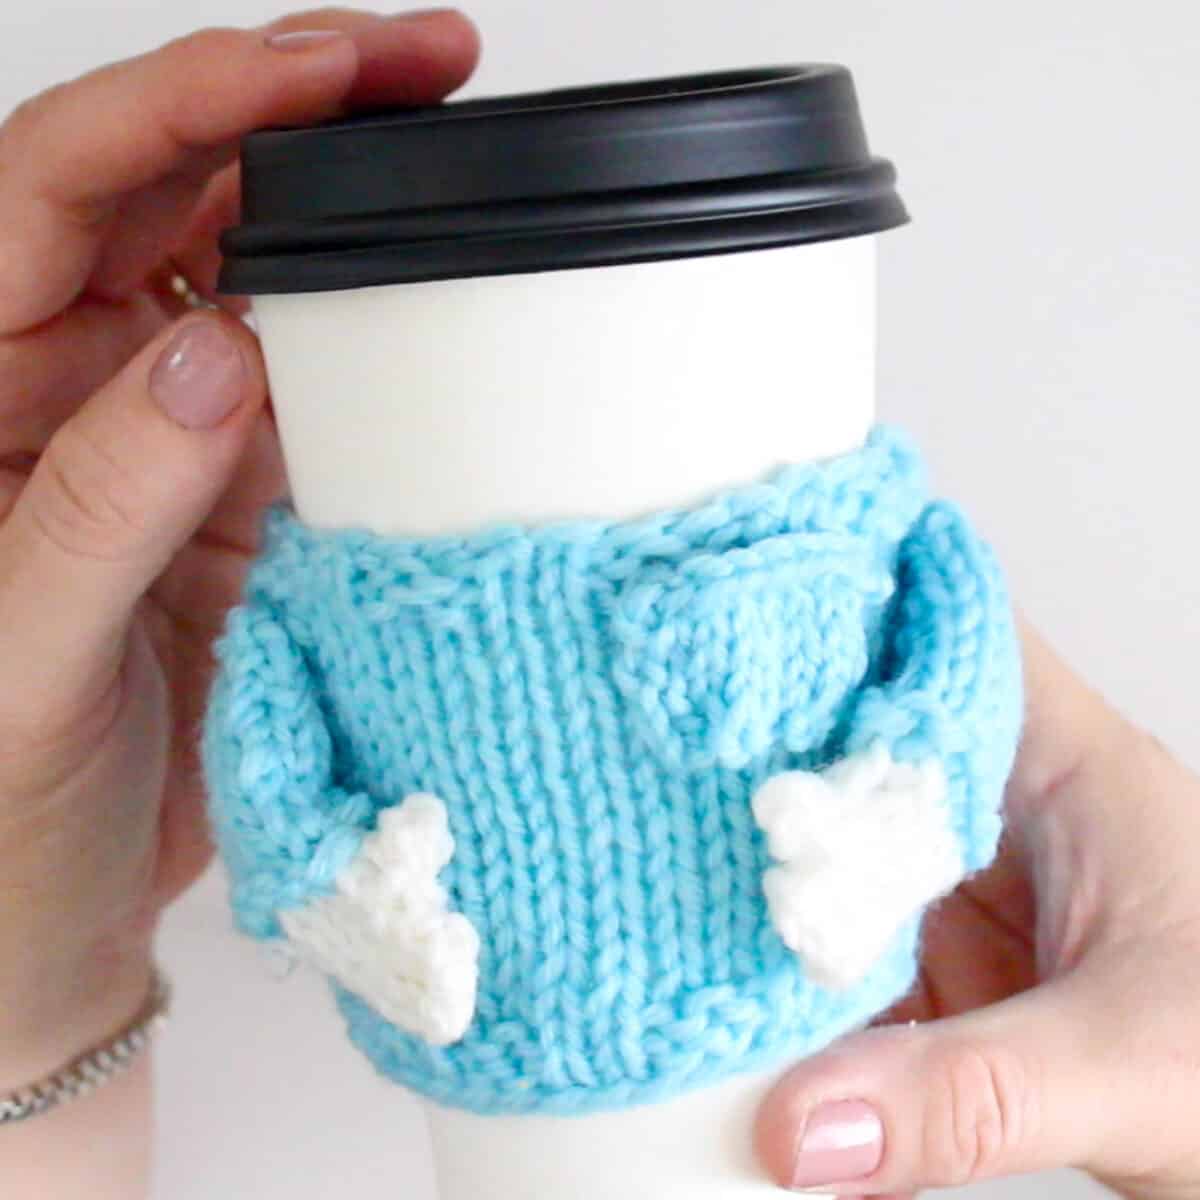 Finished knitted mug cozy in light blue yarn .